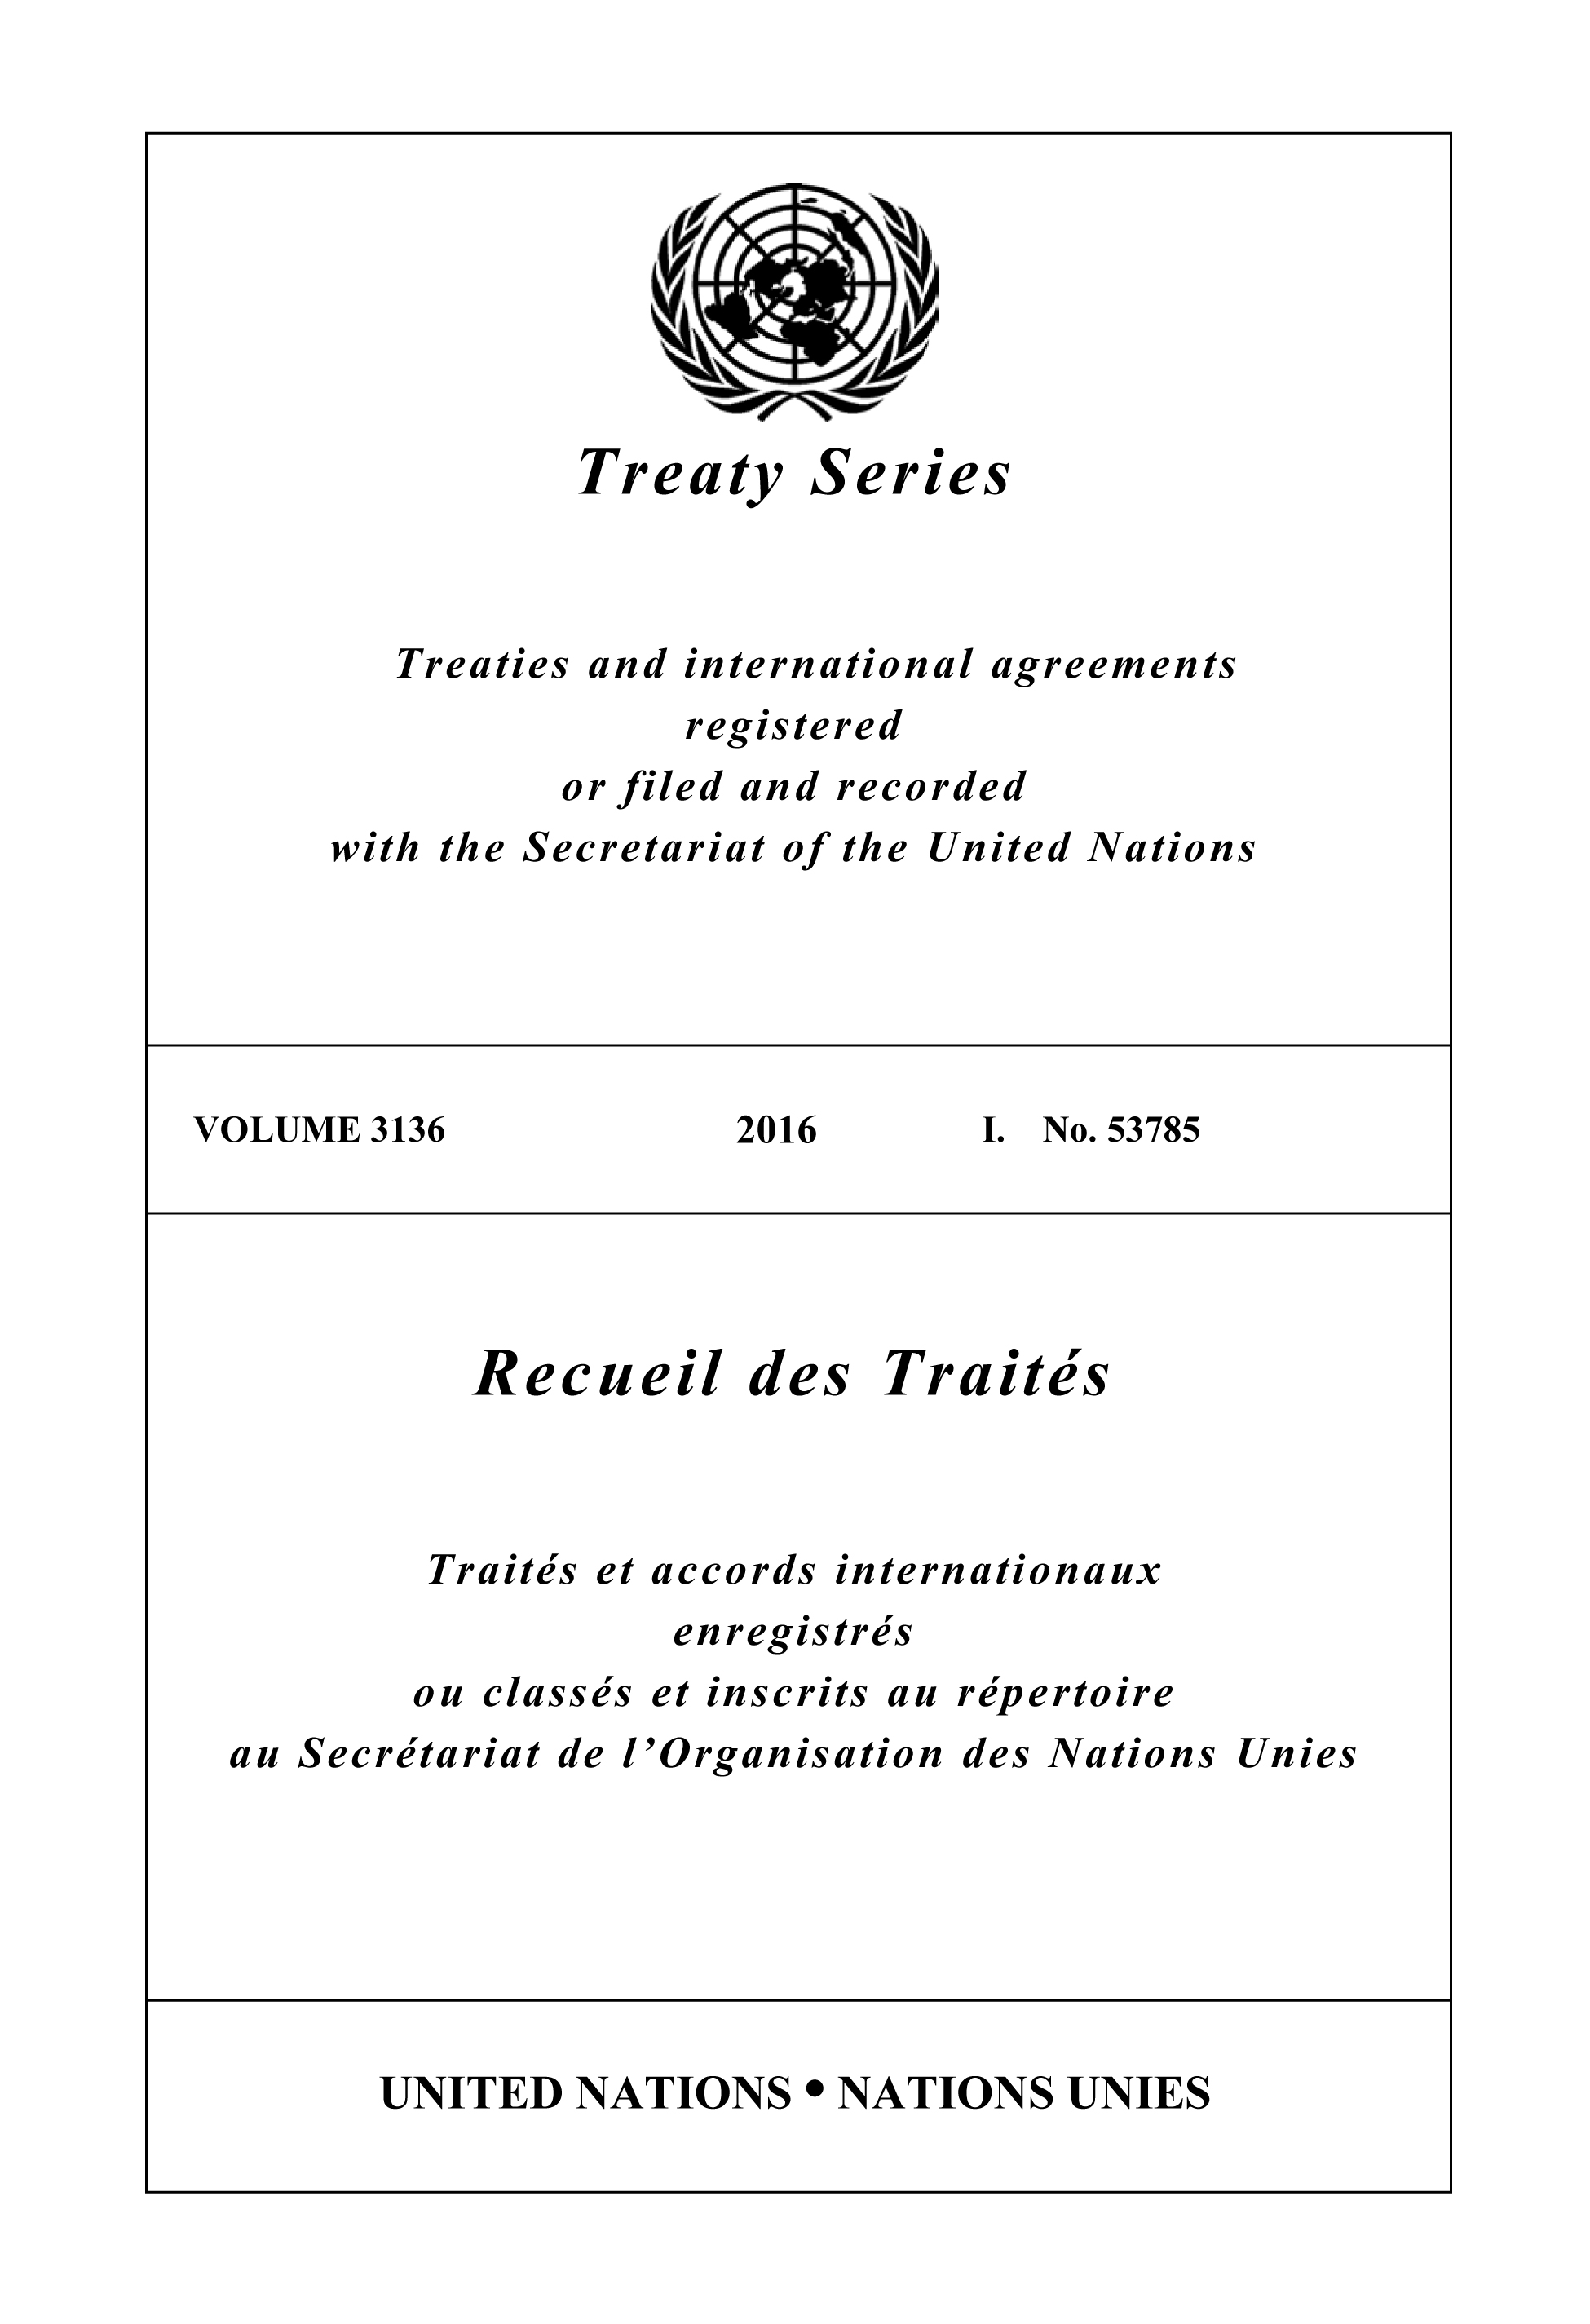 image of Treaty Series 3136